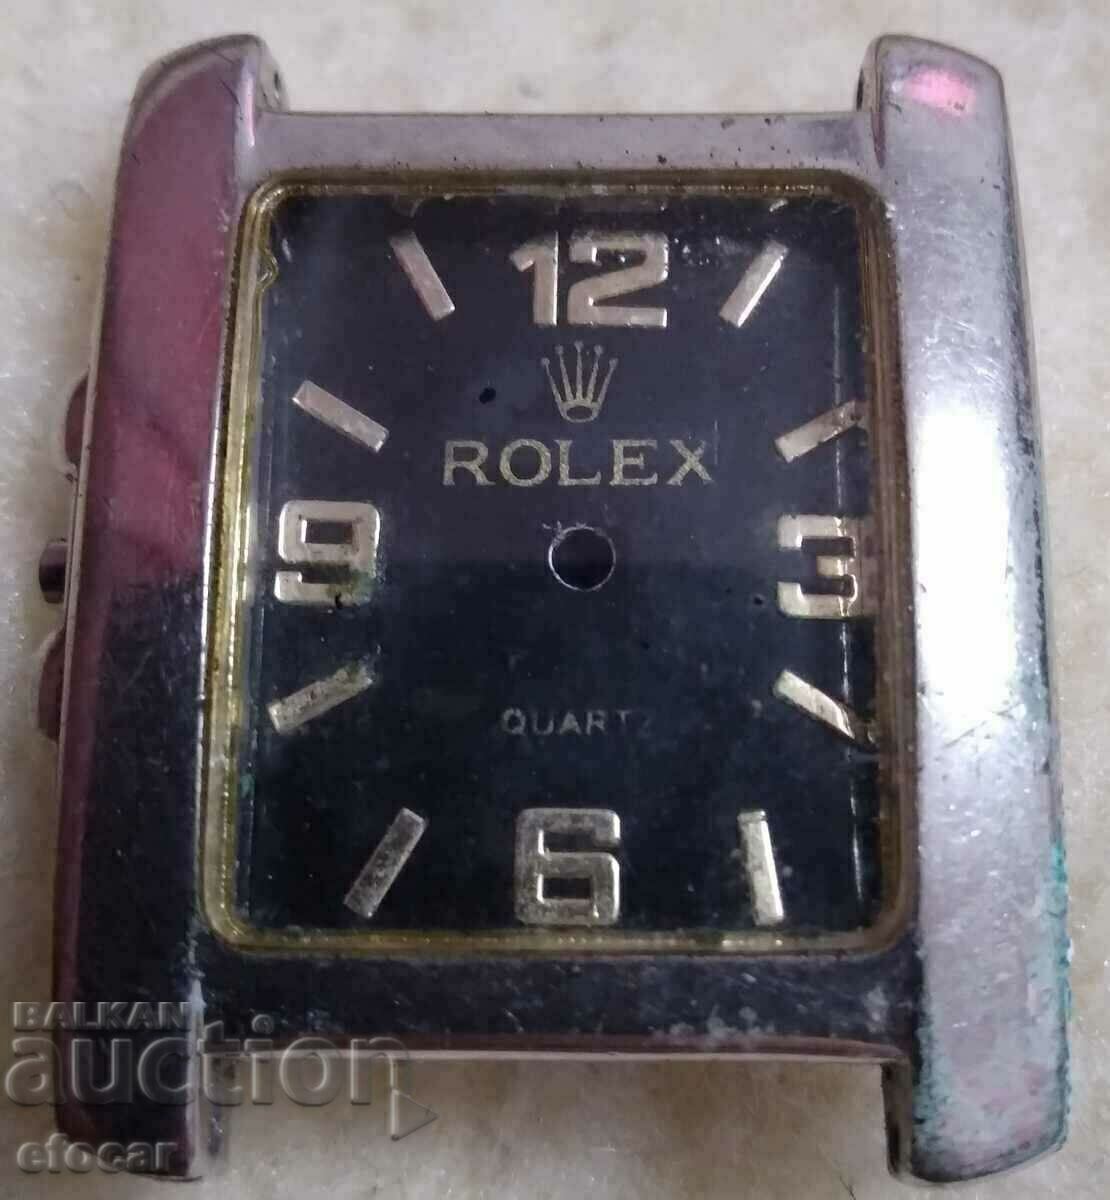 Rolex watch starting from 0.01st